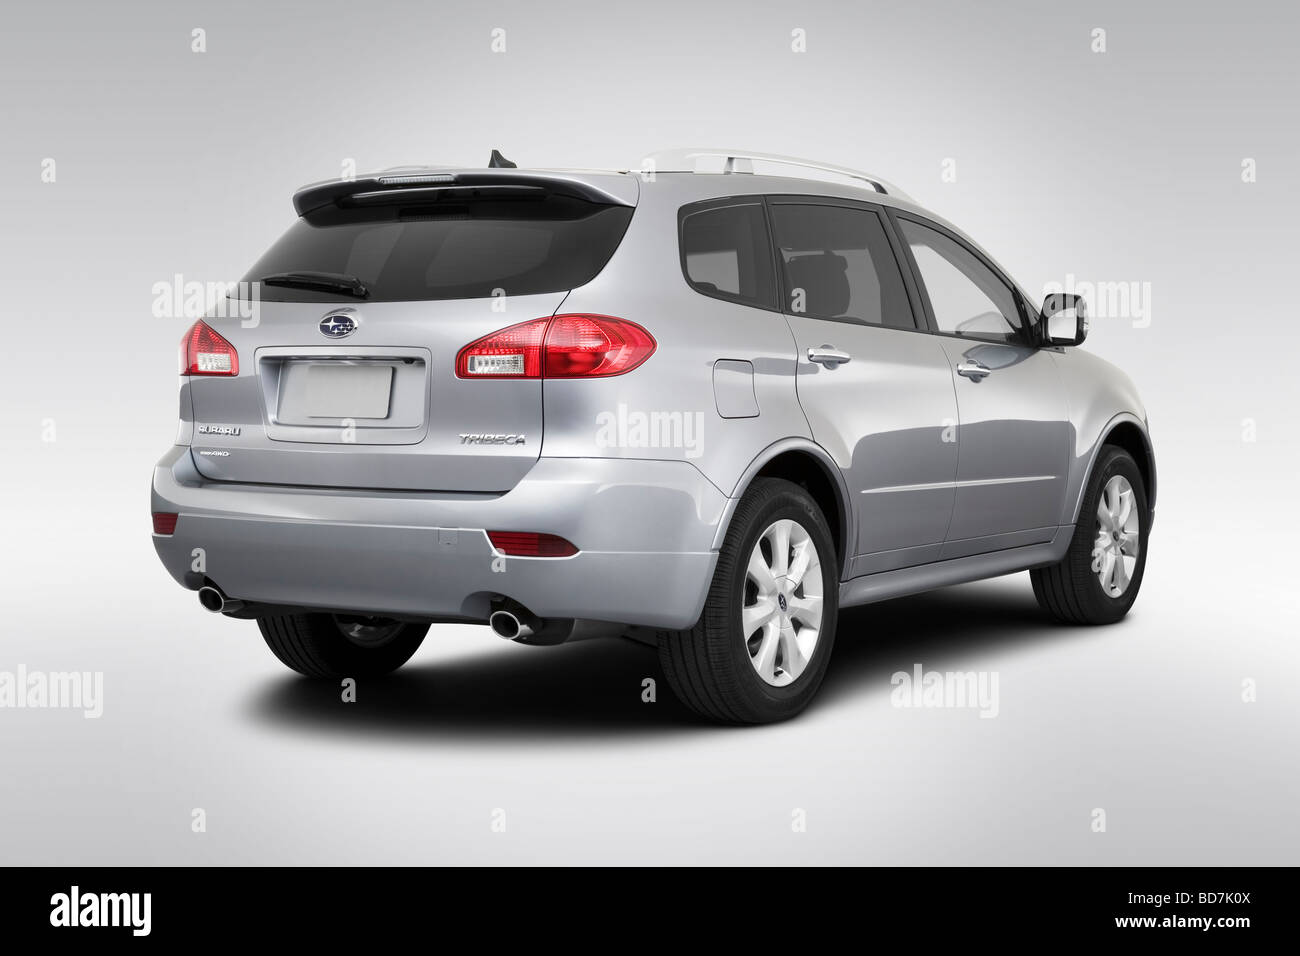 Subaru tribeca hi-res stock photography and images - Alamy